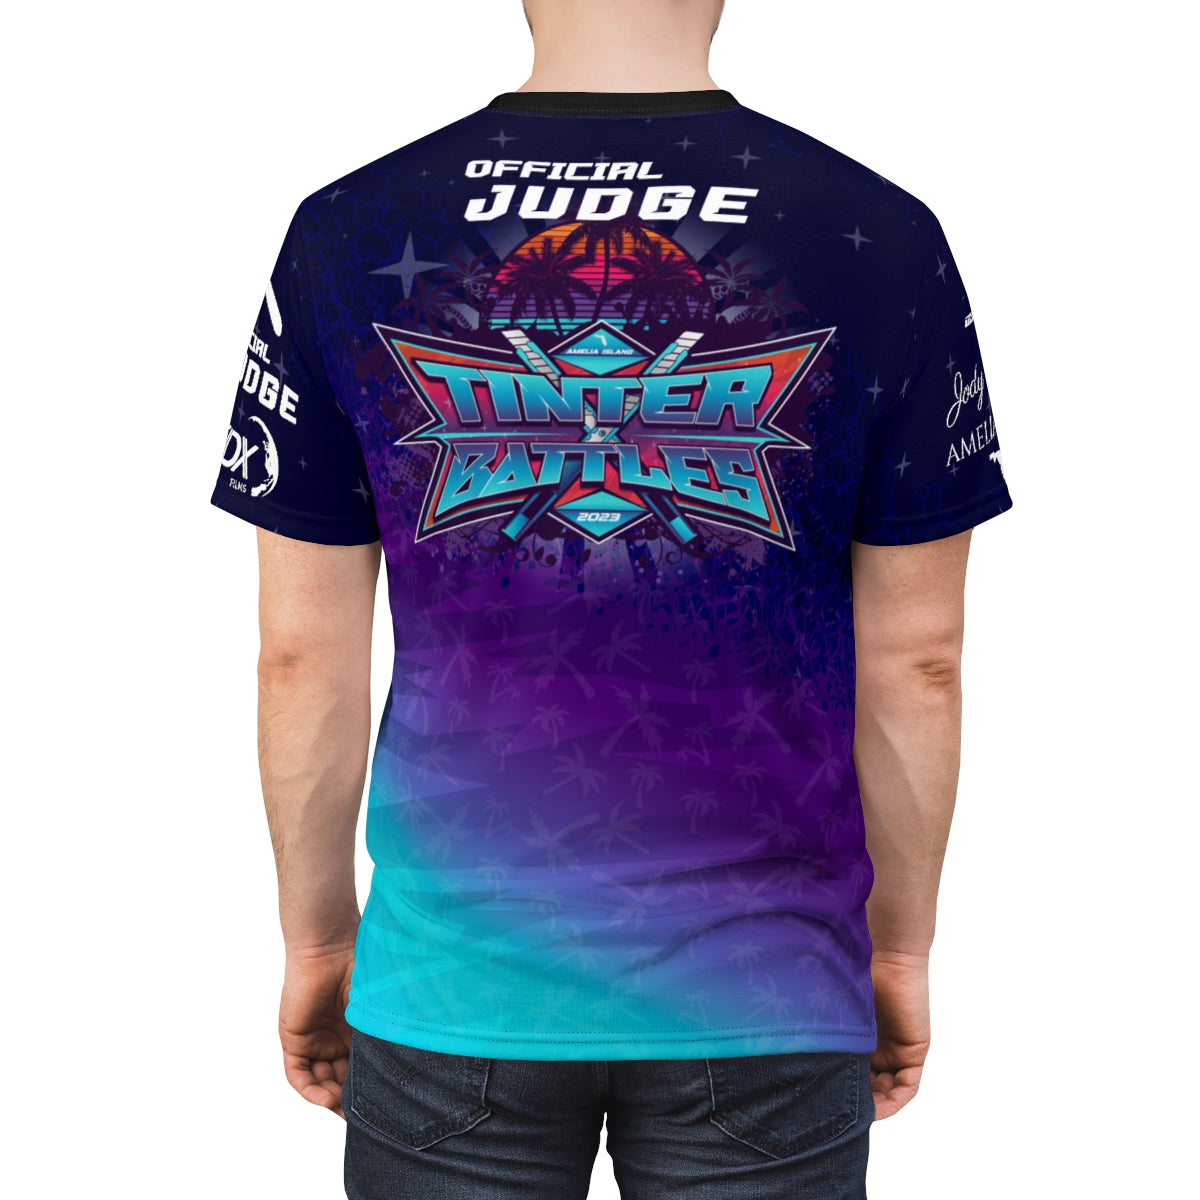 Jody Knight TB23 Official Judges Shirt